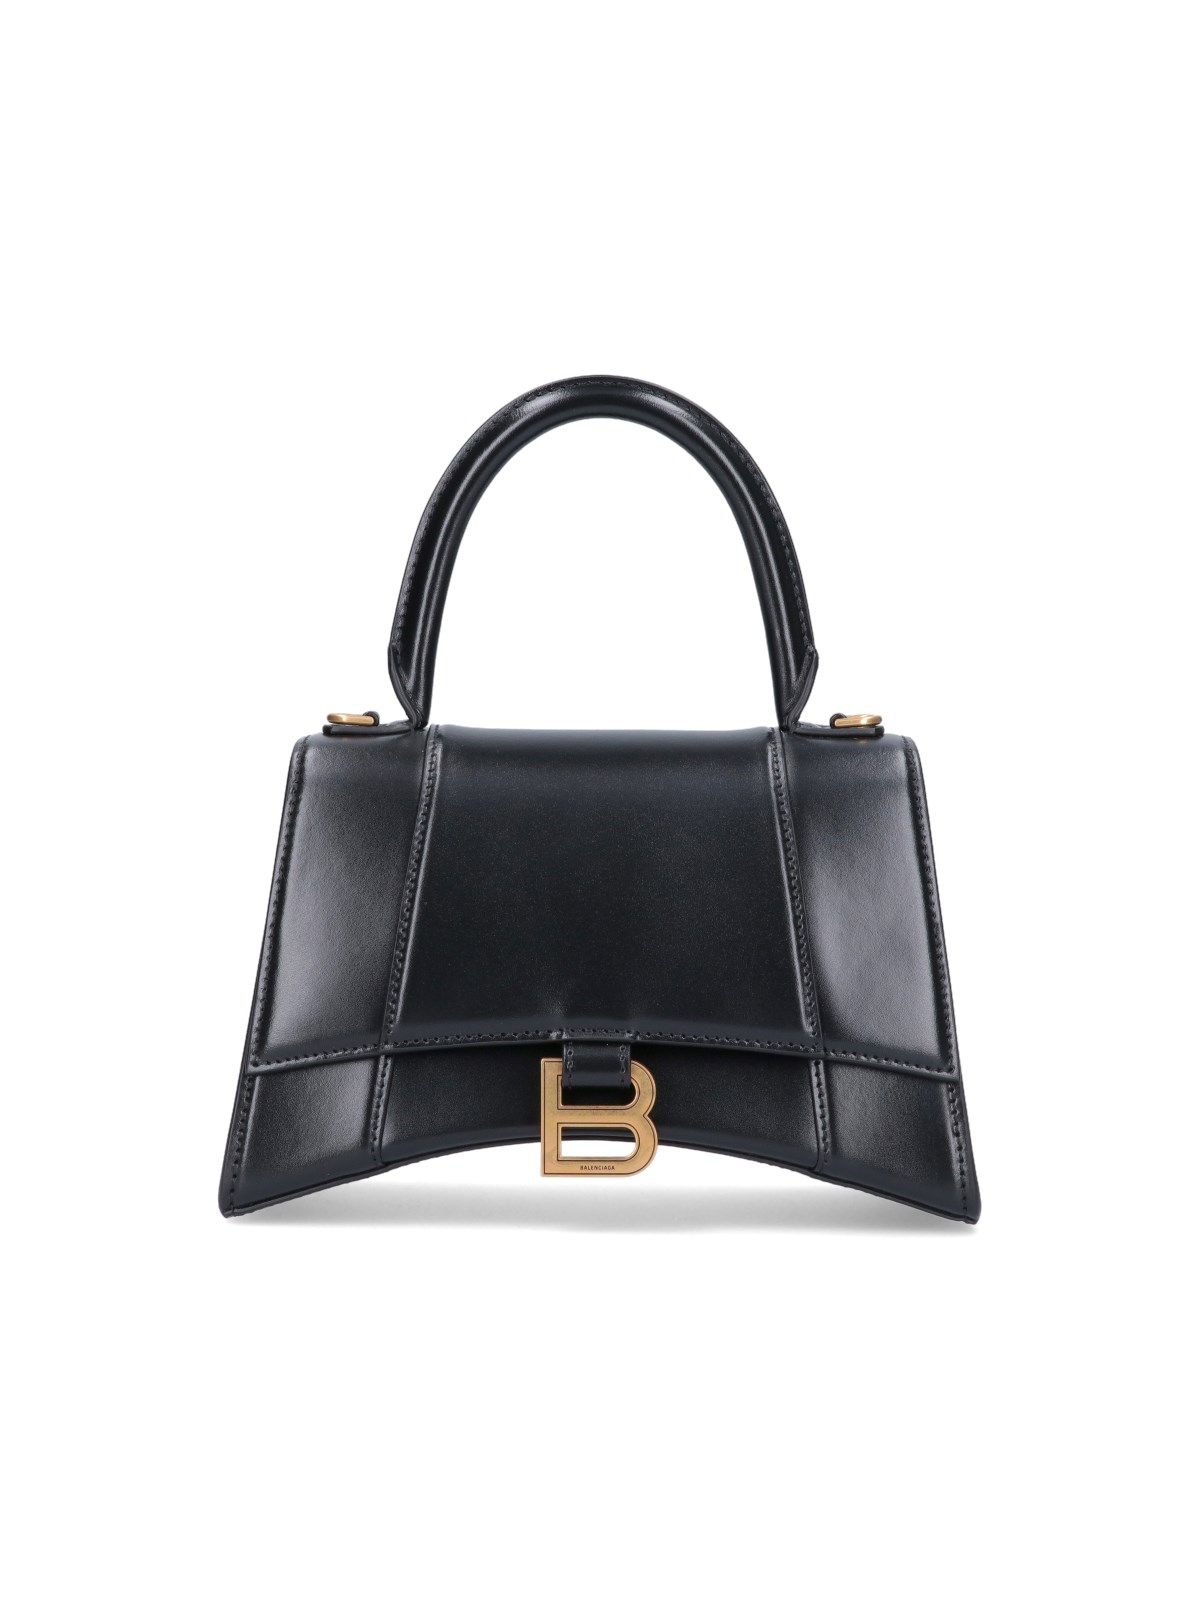 Balenciaga 'hourglass' Bag In Black  